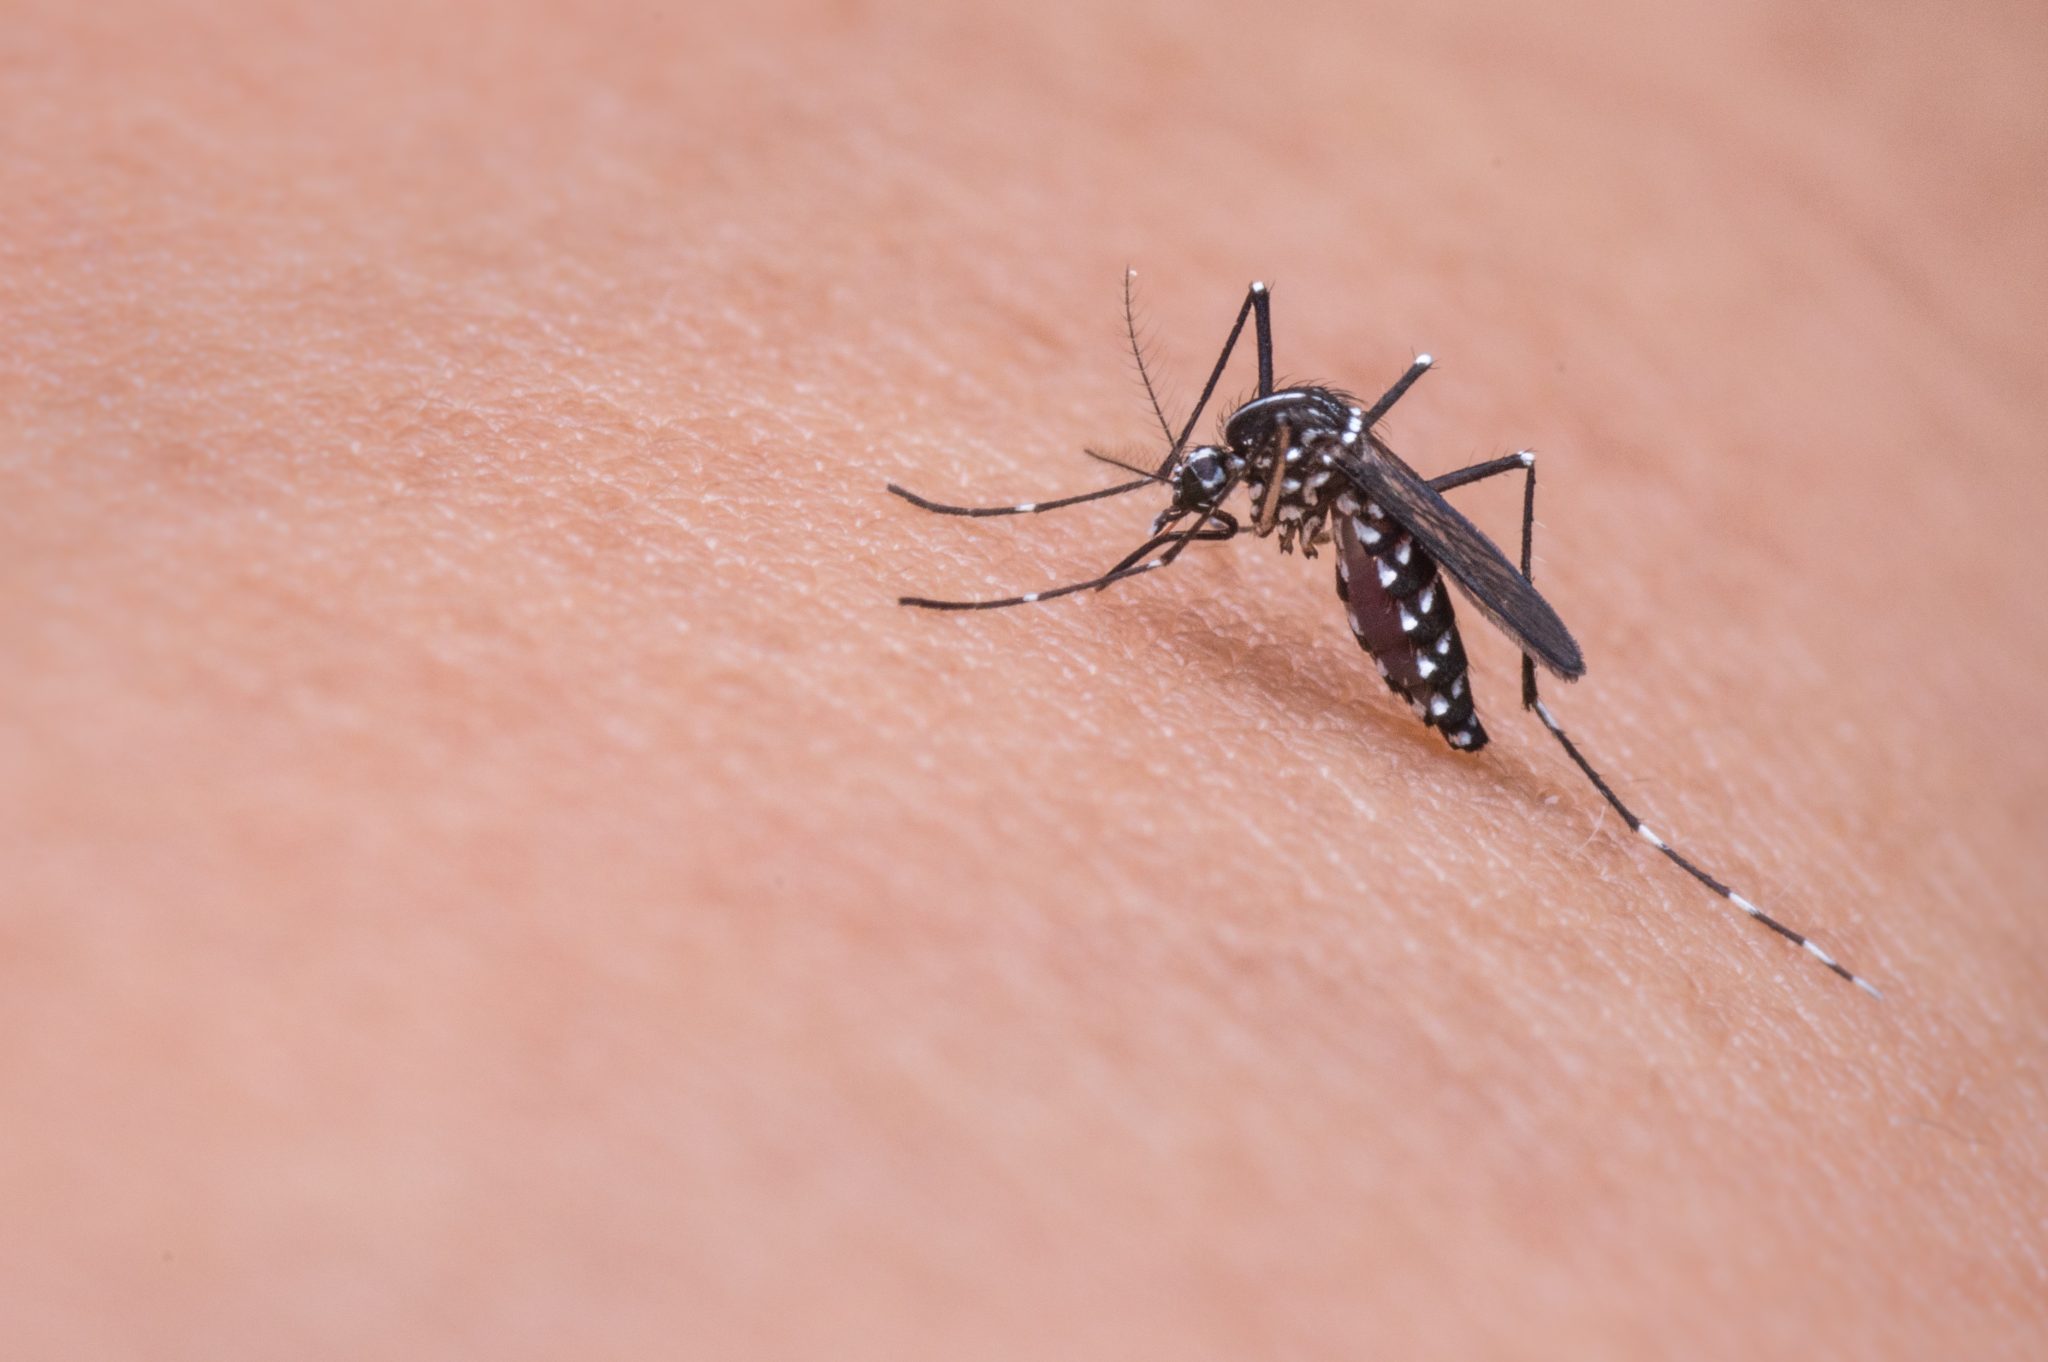 CRISPR Provides the Potential to Cut Down Malaria: But Should We?